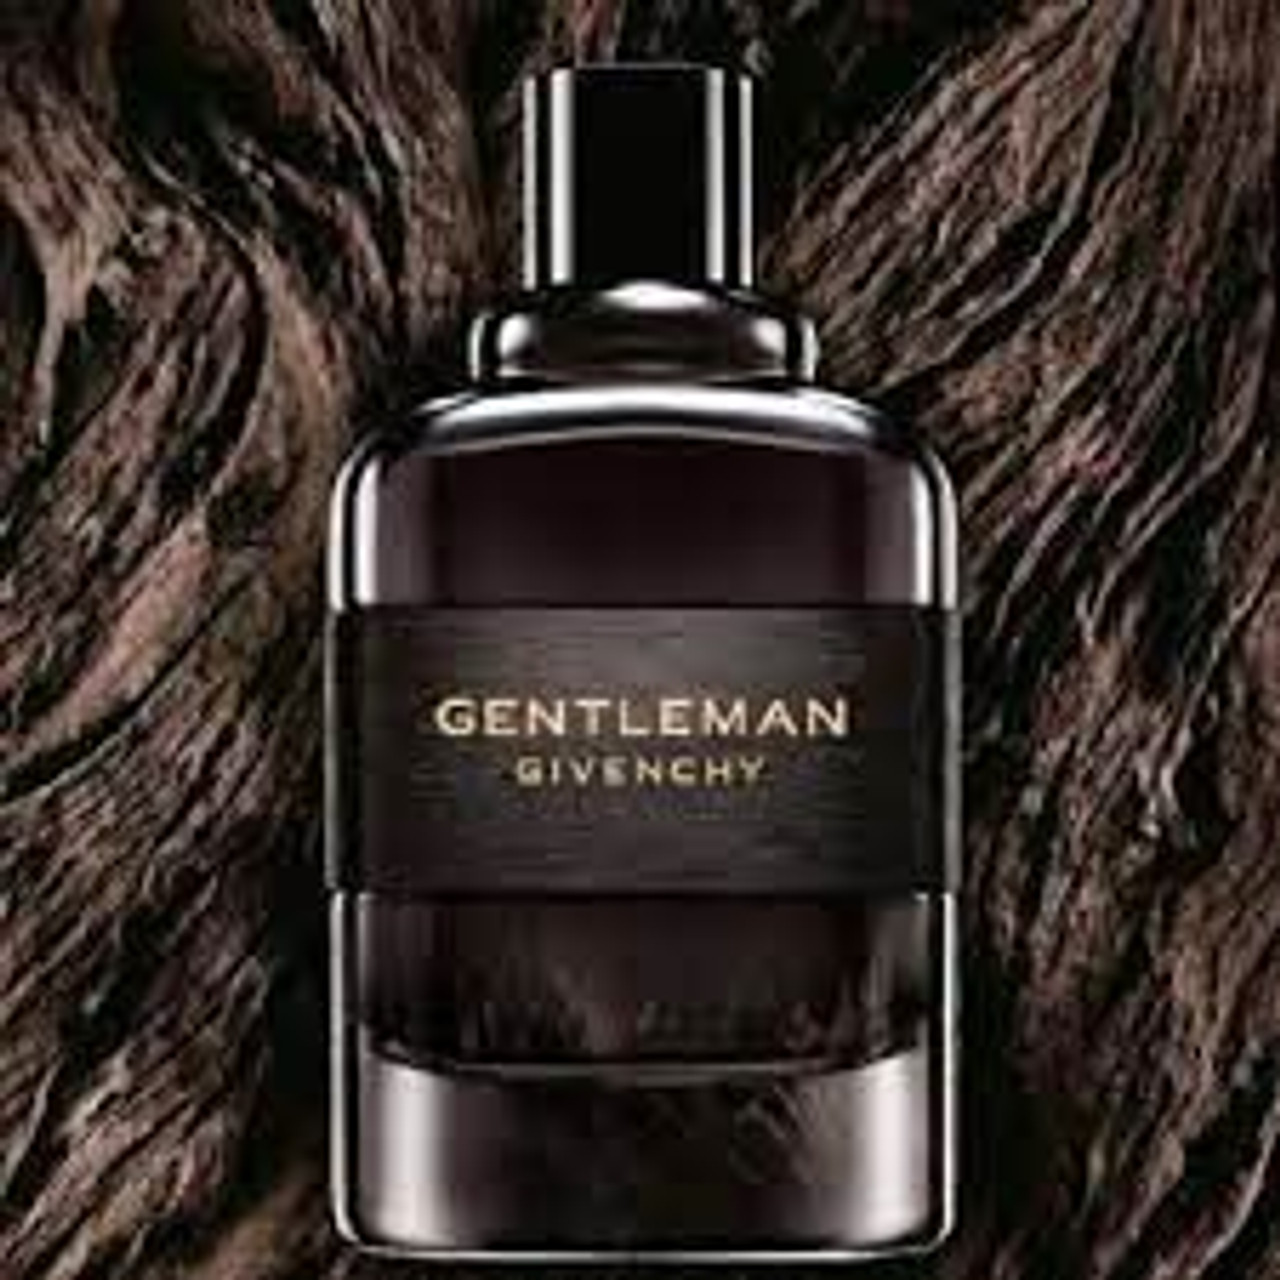 Gentleman Boisee by Givenchy Eau de Parfum Spray 3.3 oz